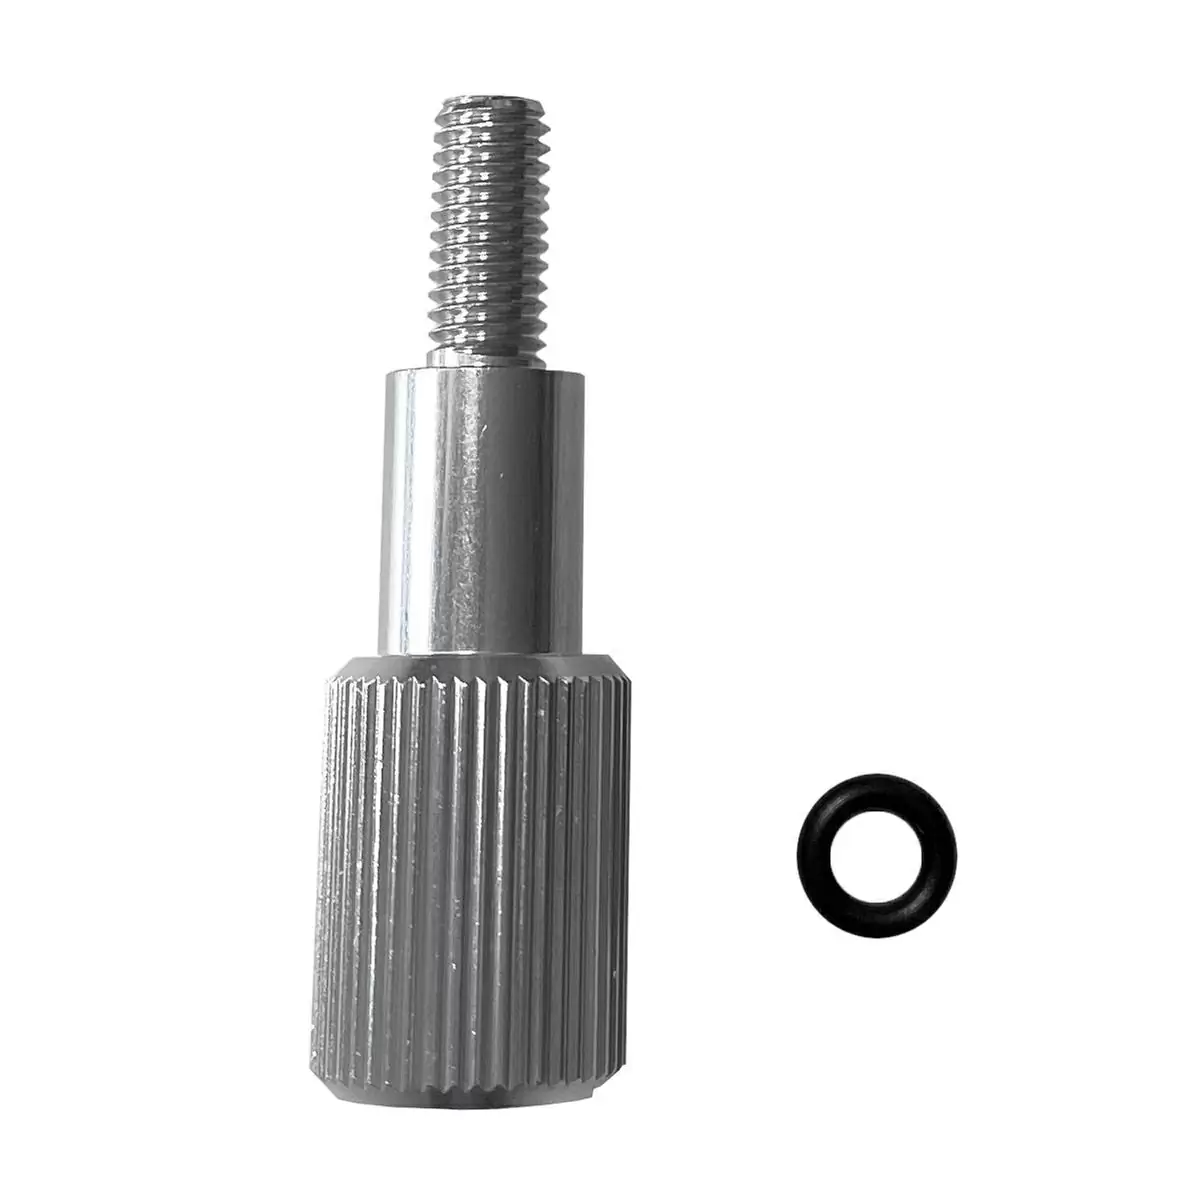 Knurled screw - image